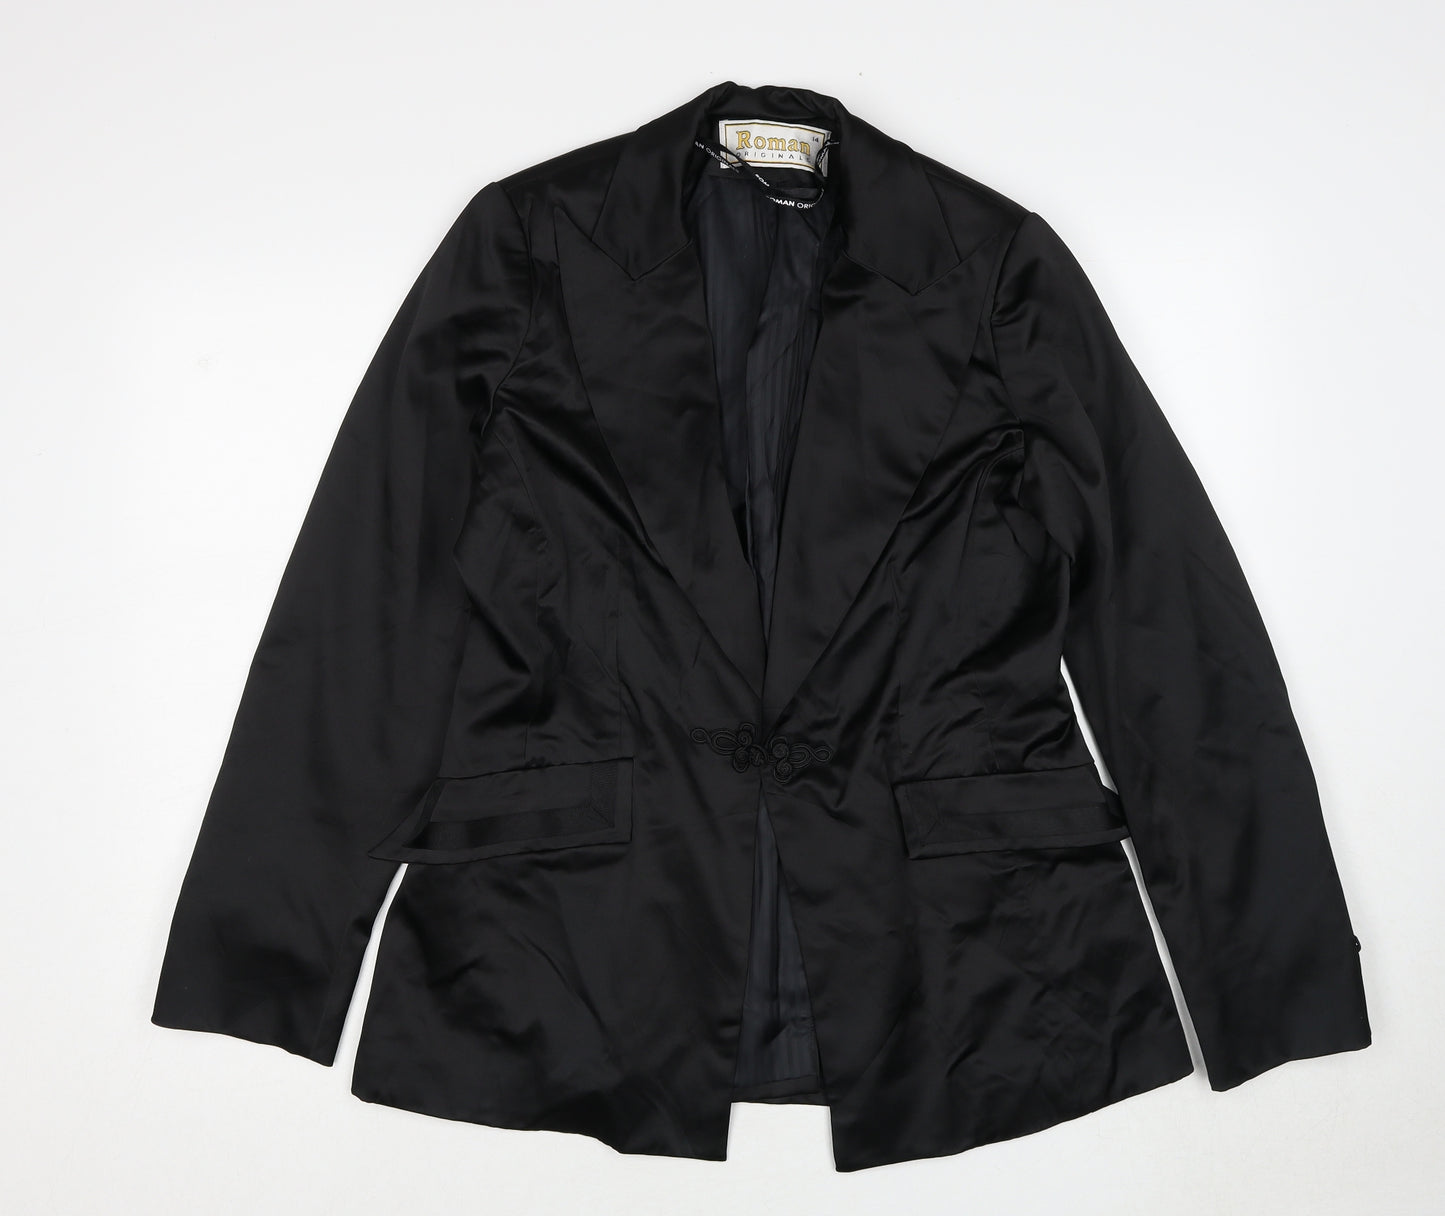 Roman Originals Womens Black Polyester Jacket Blazer Size 14